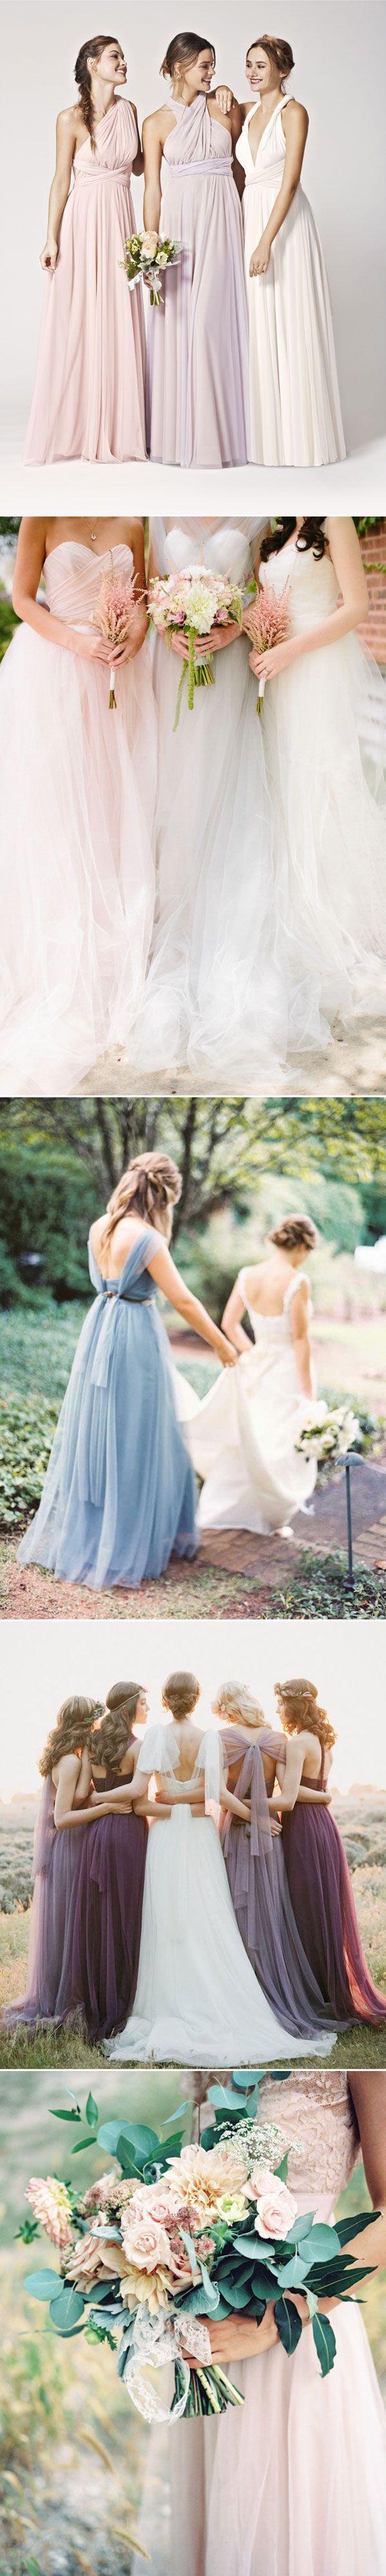 Hochzeit - Top 6 Bridesmaid Dress Trends For Fall Wedding 2015